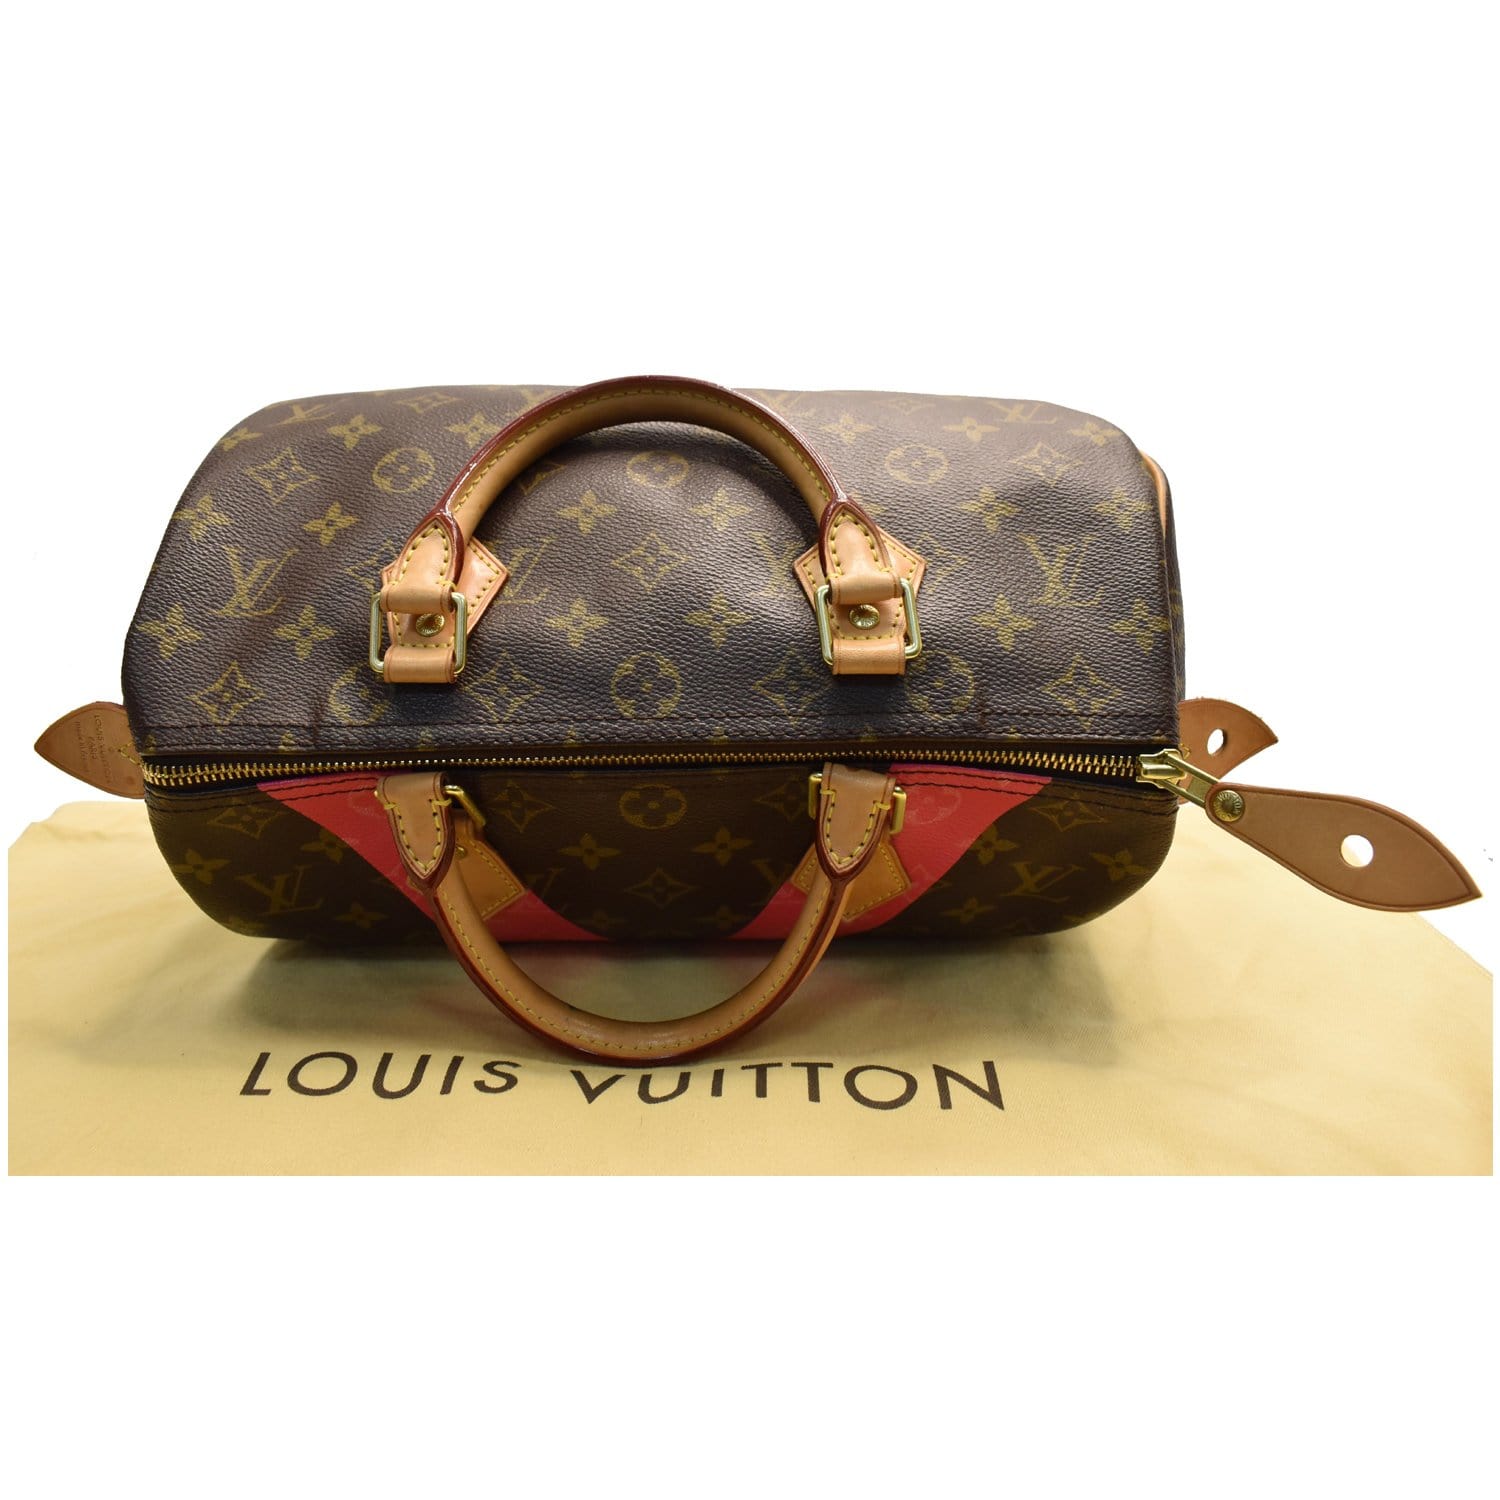 Iconic Louis Vuitton Speedy 30 Handbag Limited Edition Grenade V